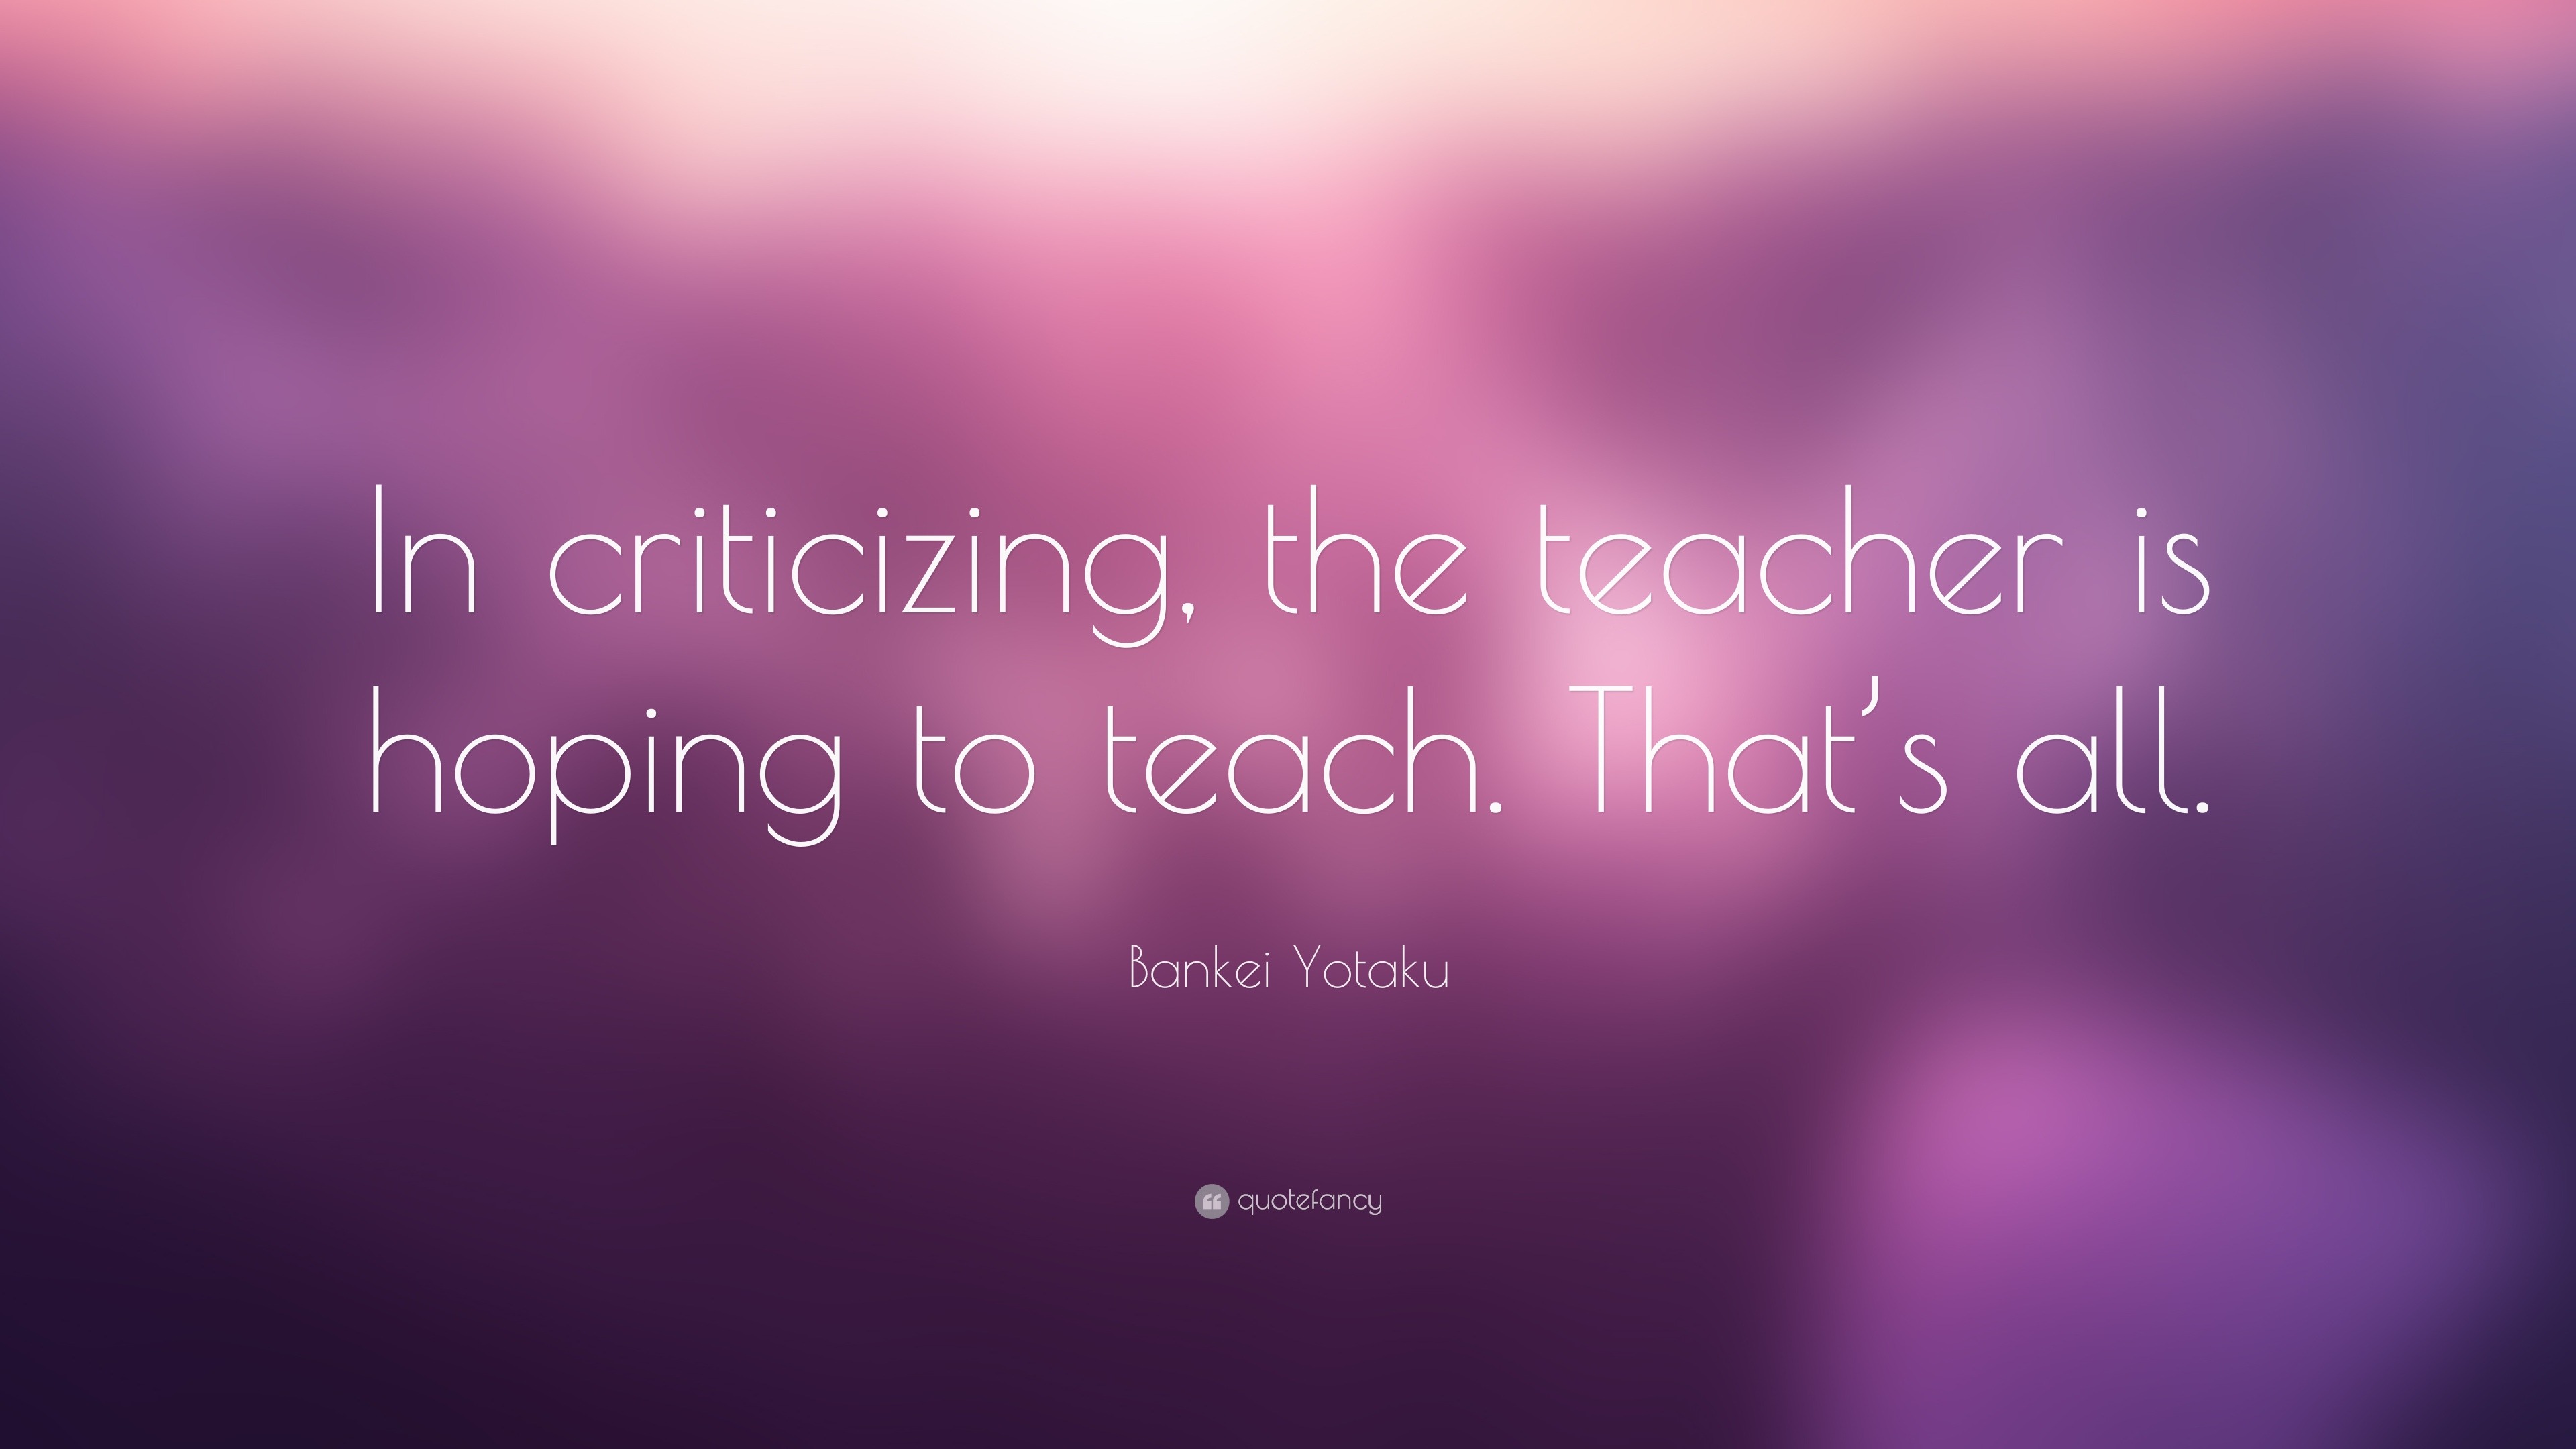 Bankei Yotaku Quote: “In criticizing, the teacher is hoping to teach ...